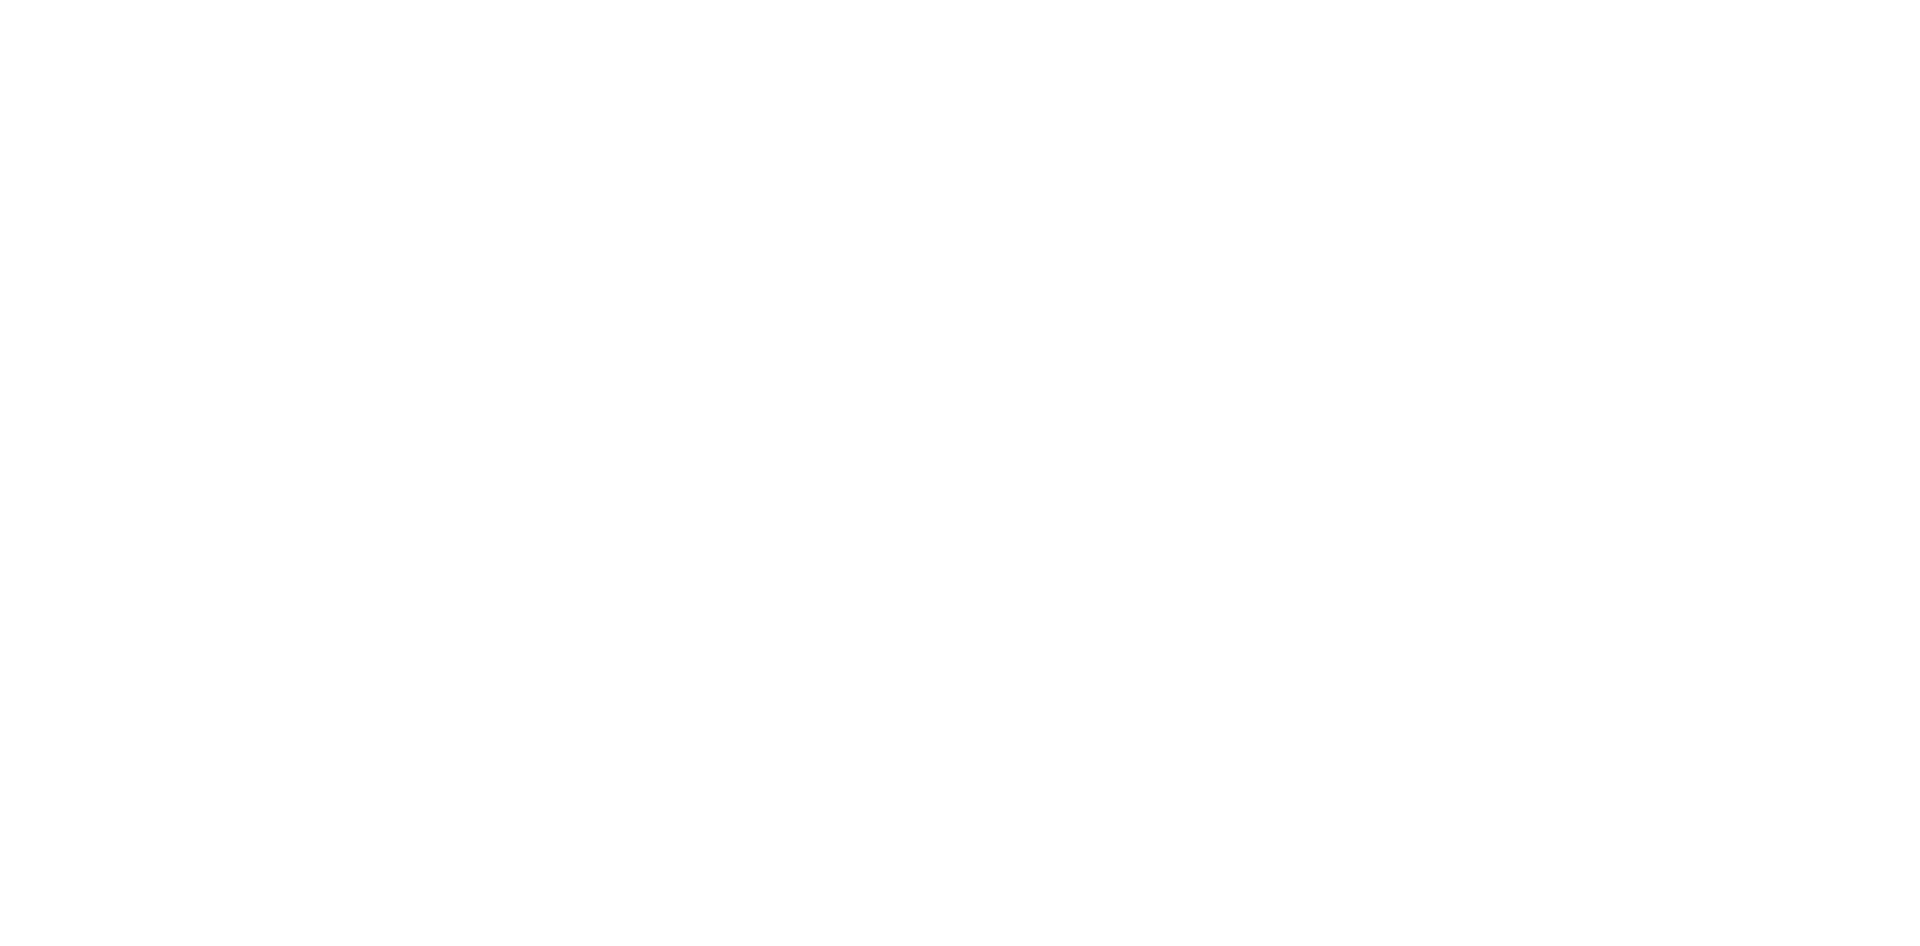 IMDb logo - Visit Ferdi Fischer's IMDb profile